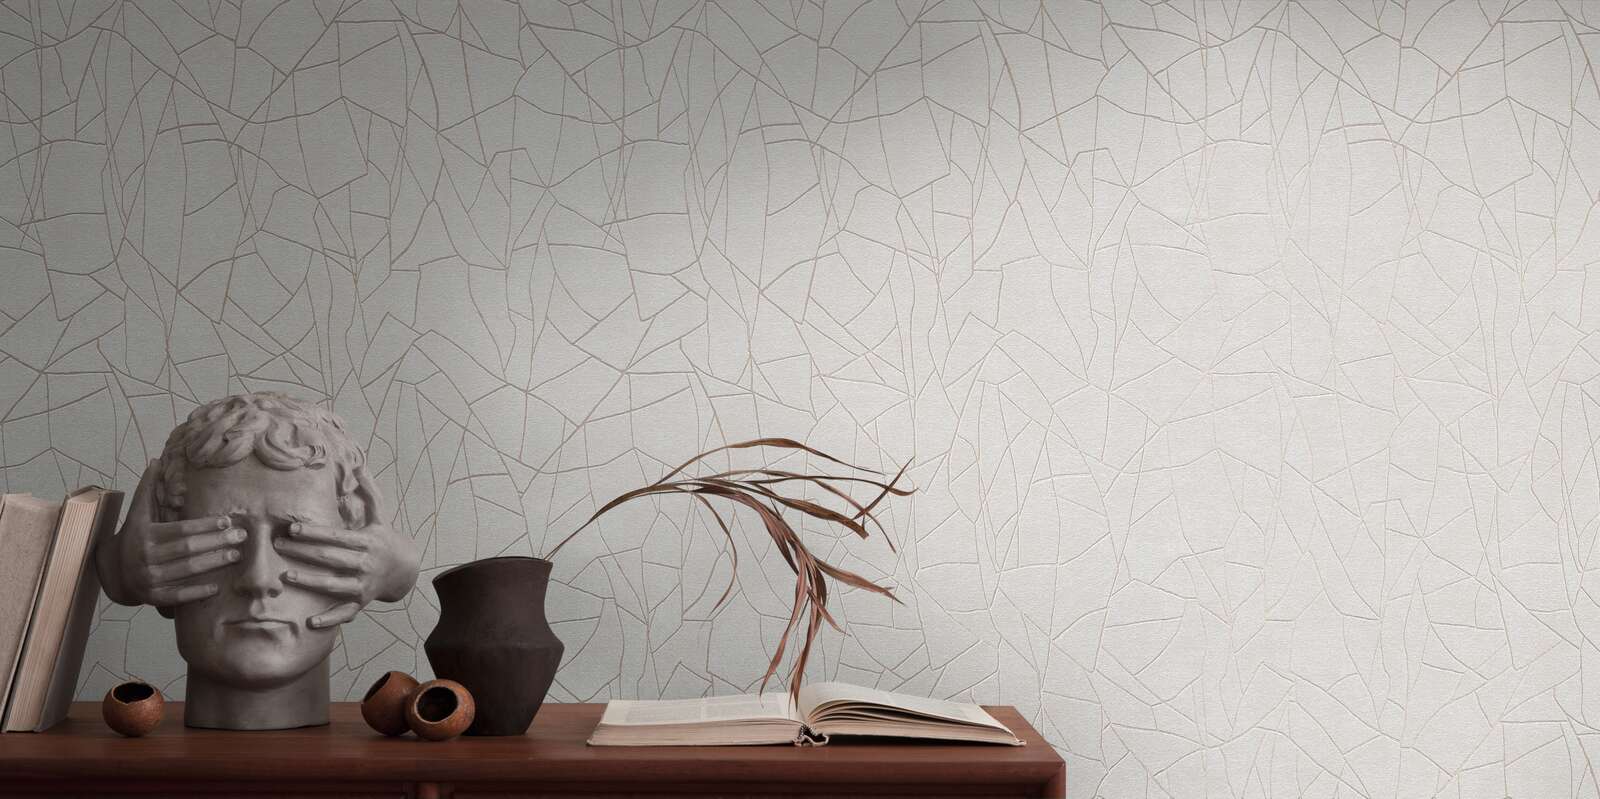             Vliestapete mit grafischem 3D Naturmotiv – Grau, Weiß
        